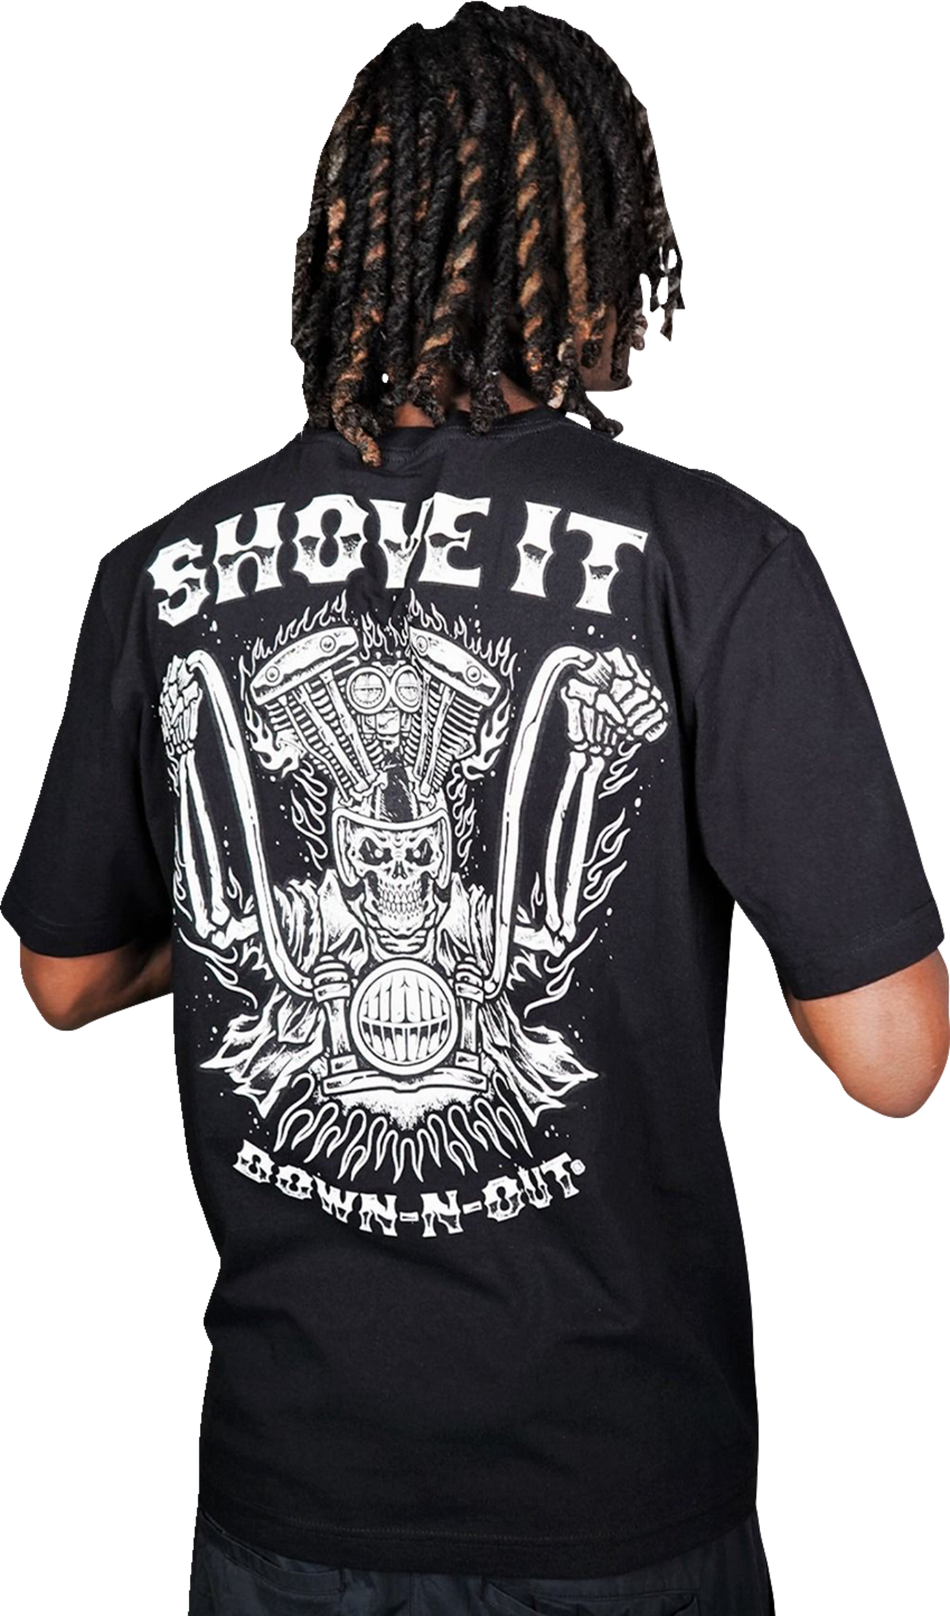 LETHAL THREAT Down-N-Out Shove It T-Shirt - Black - 3XL DT10046XXXL